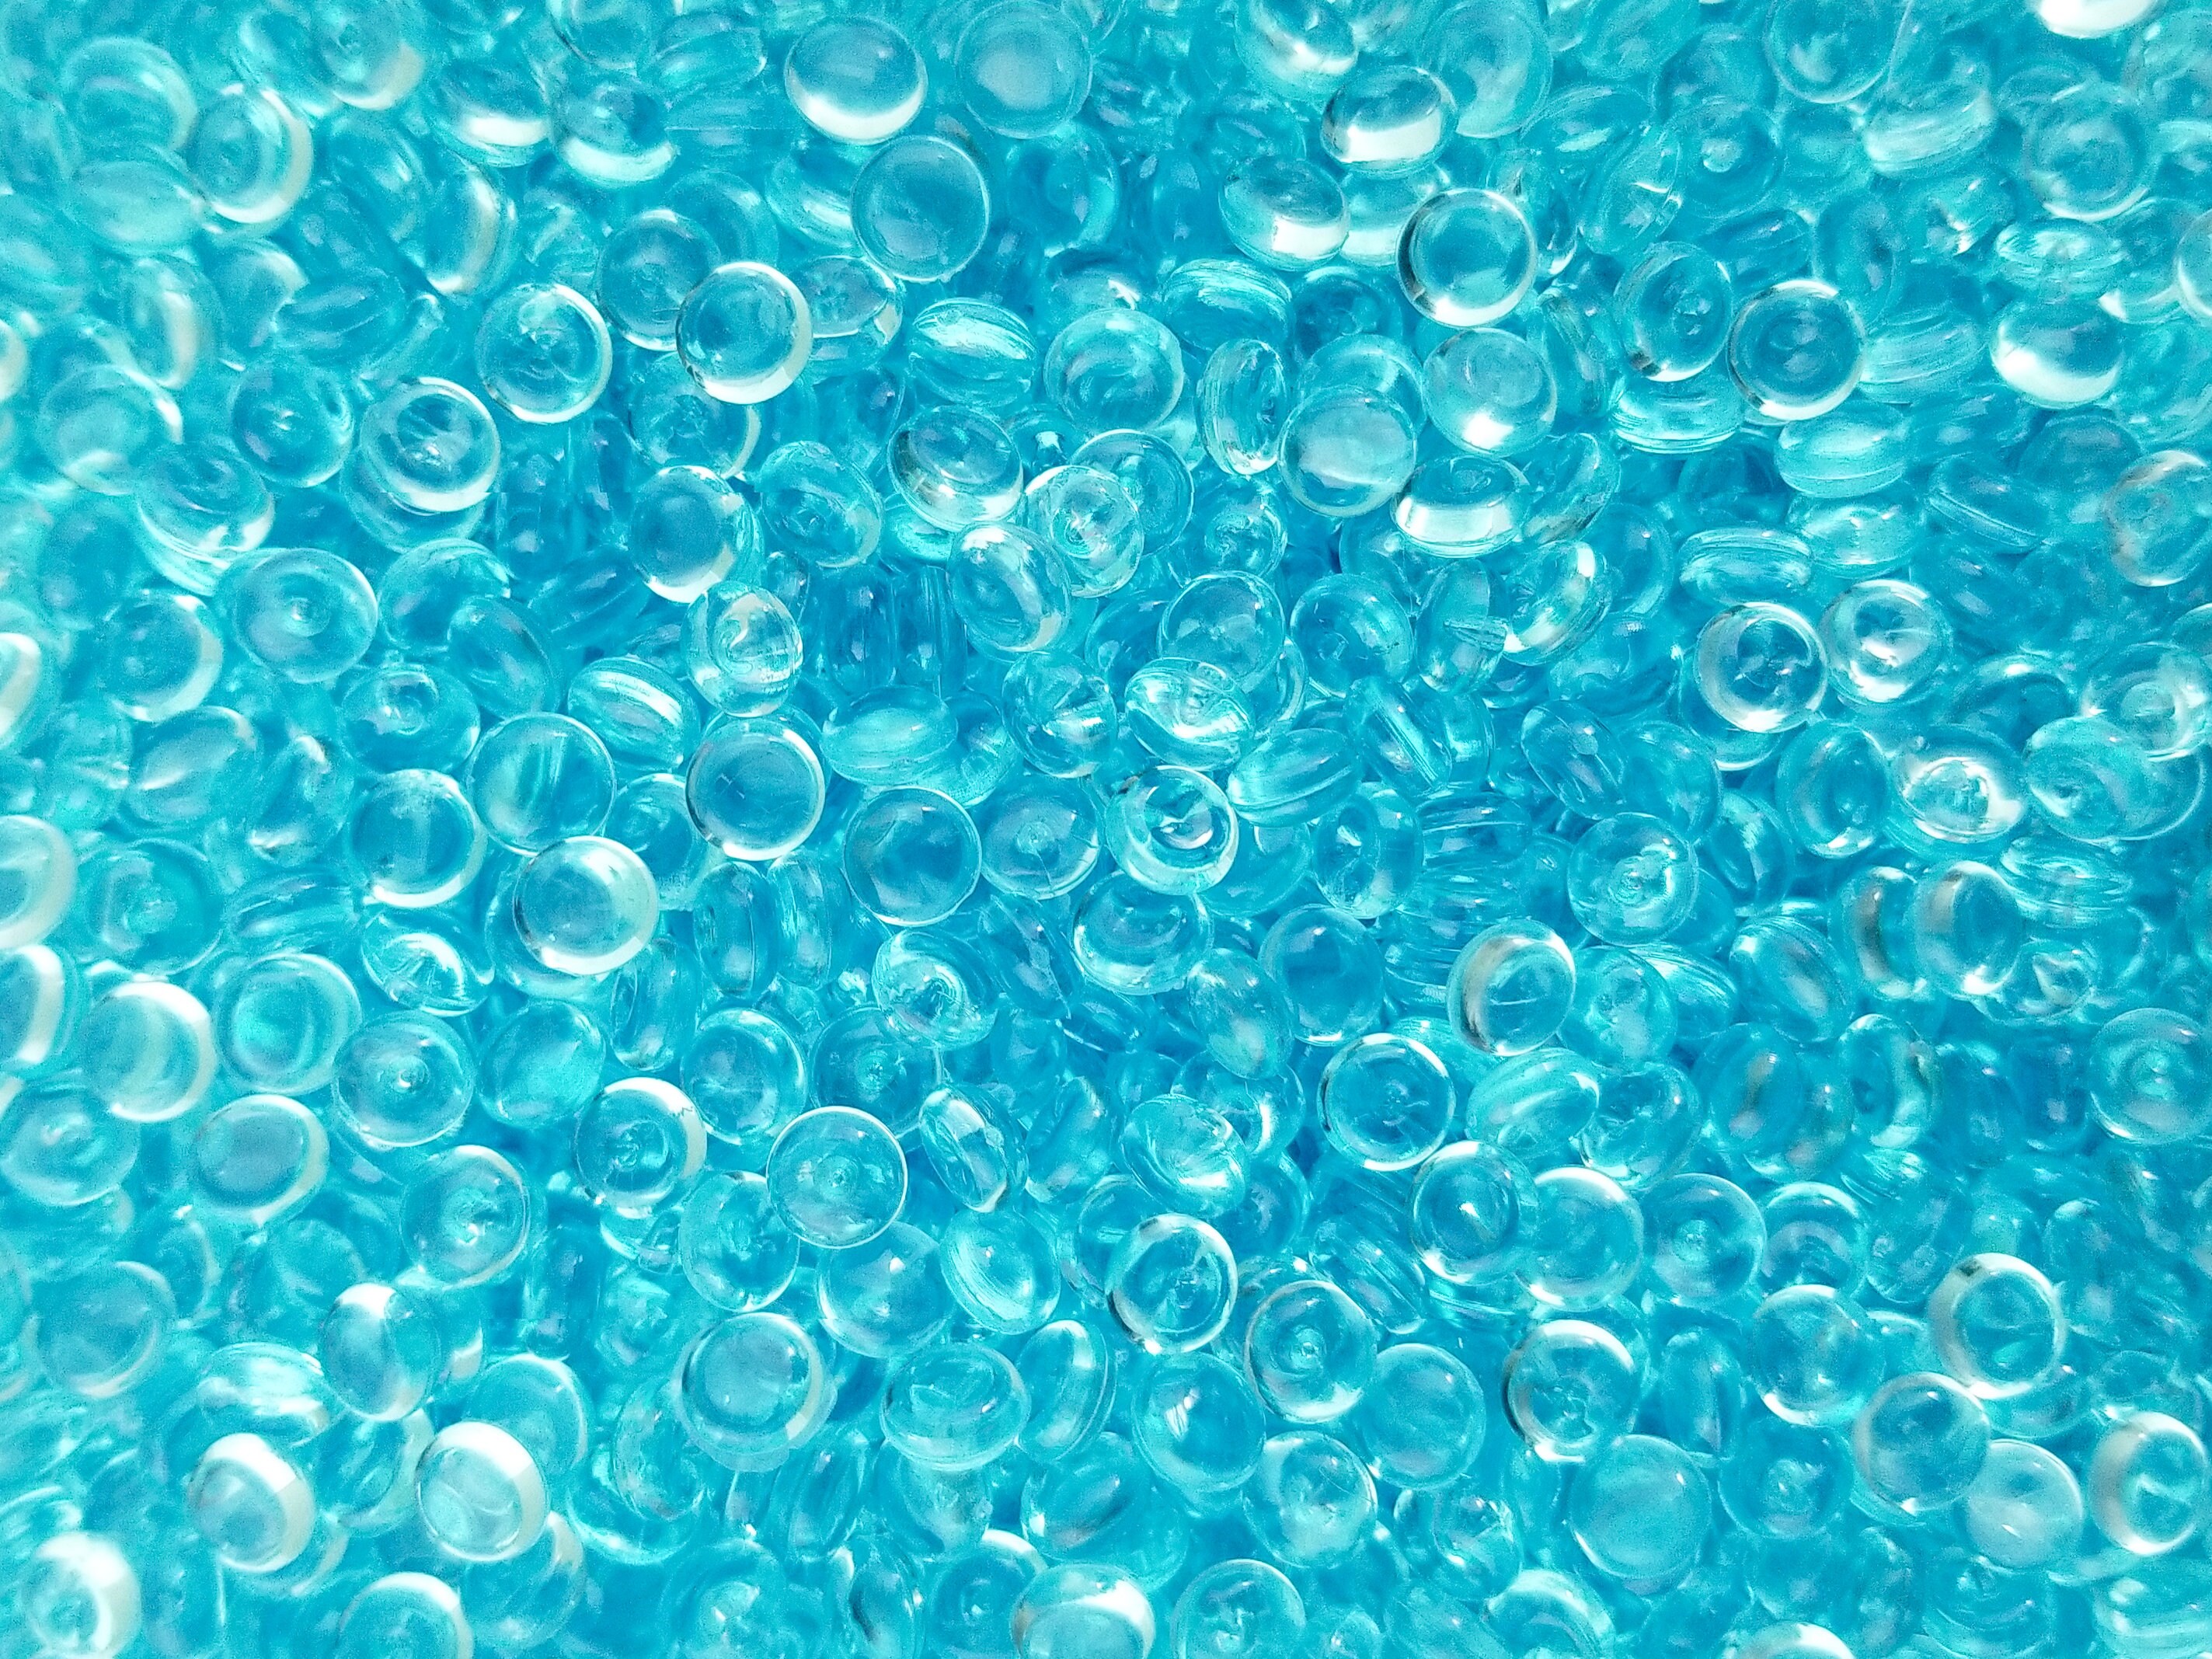 100g Blue Fishbowl Beads – Craftyrific